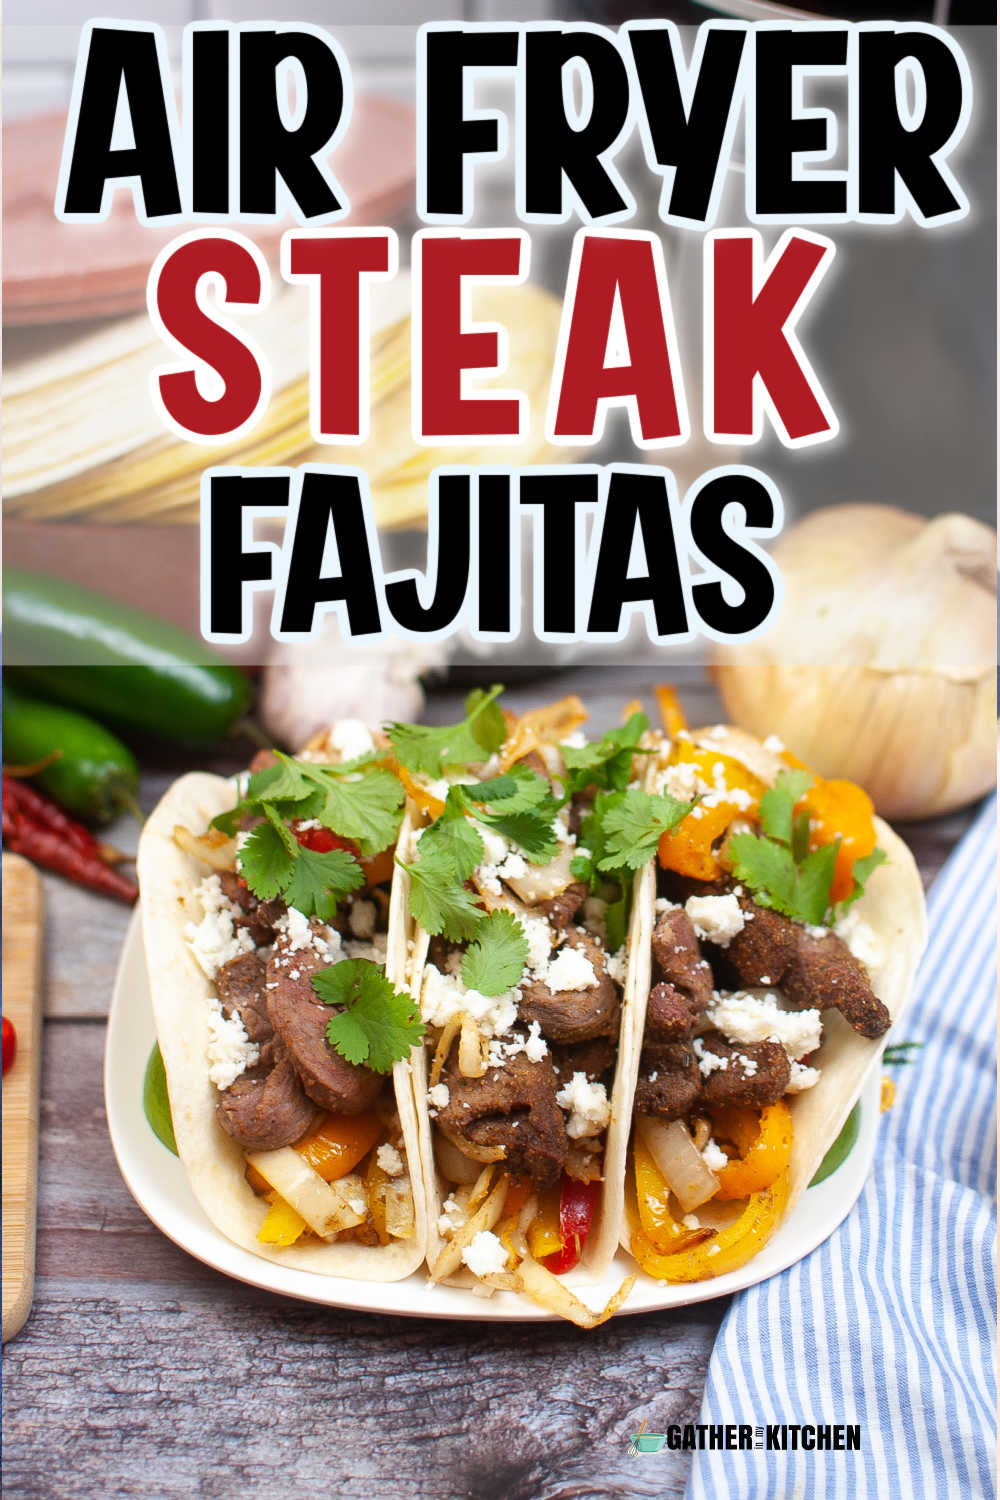 Pin image: top says "Air Fryer Steak Fajitas" and bottom has a pic of three steak fajitas on a plate.